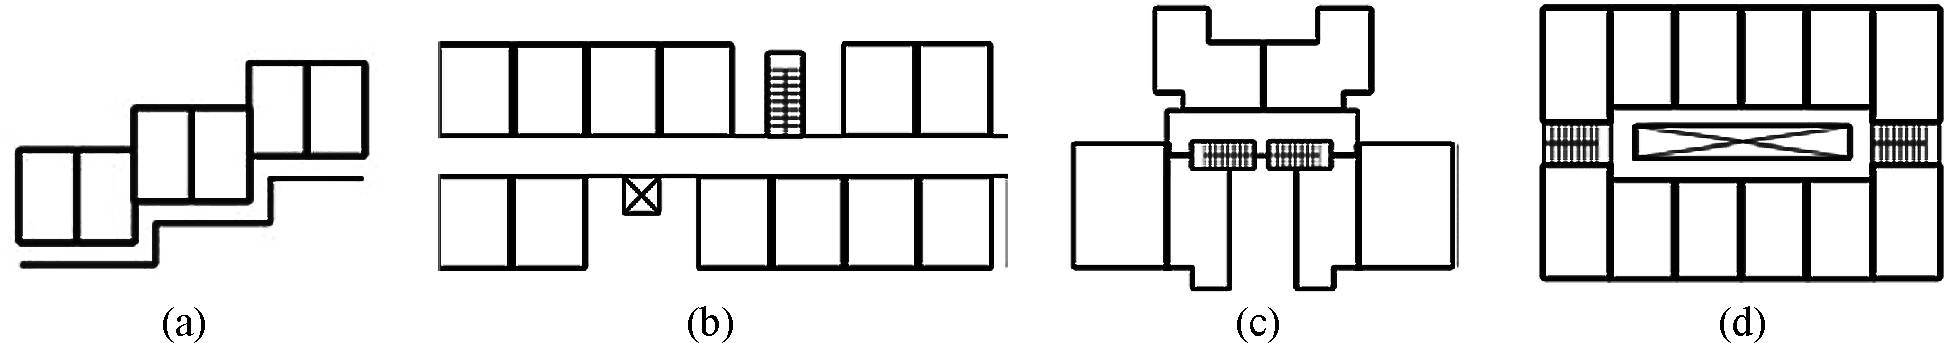 Typologies of block plans - building plan typologies [19]: (a) single-loaded corridor type, (b) double-loaded corridor type, (c) tower (point) type, and (d) atrium type.